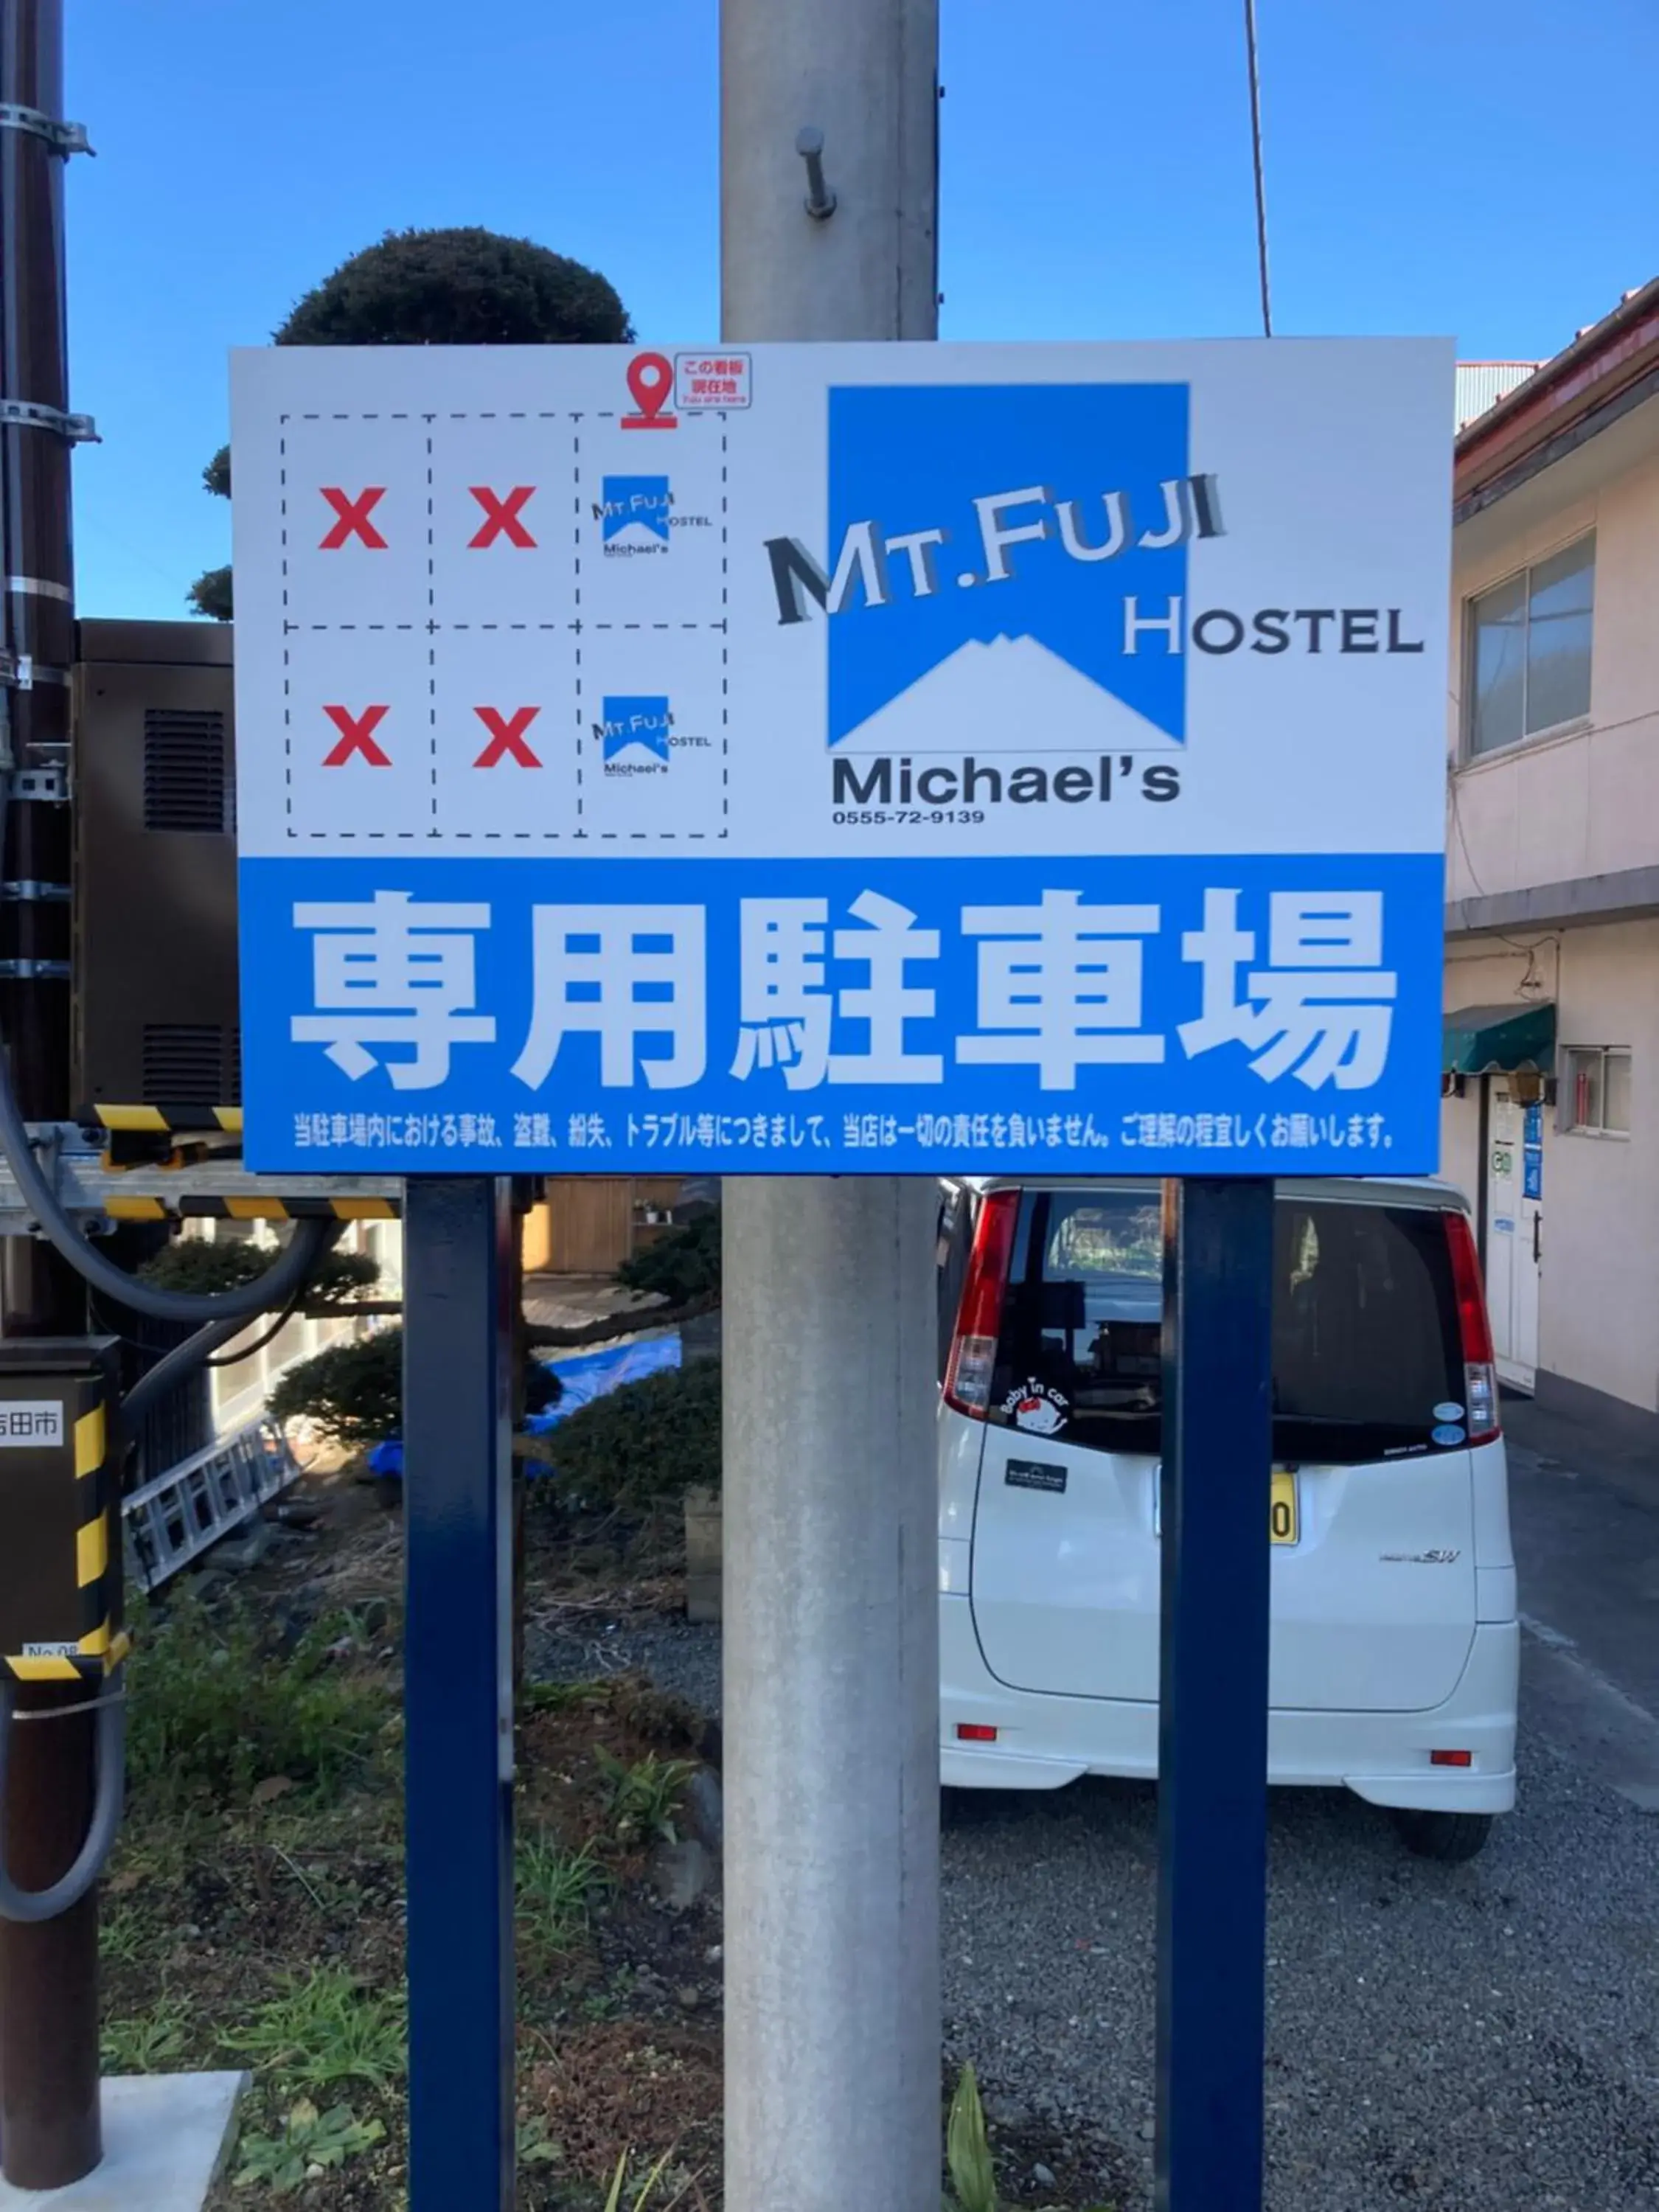 Property building in Mt Fuji Hostel Michael's